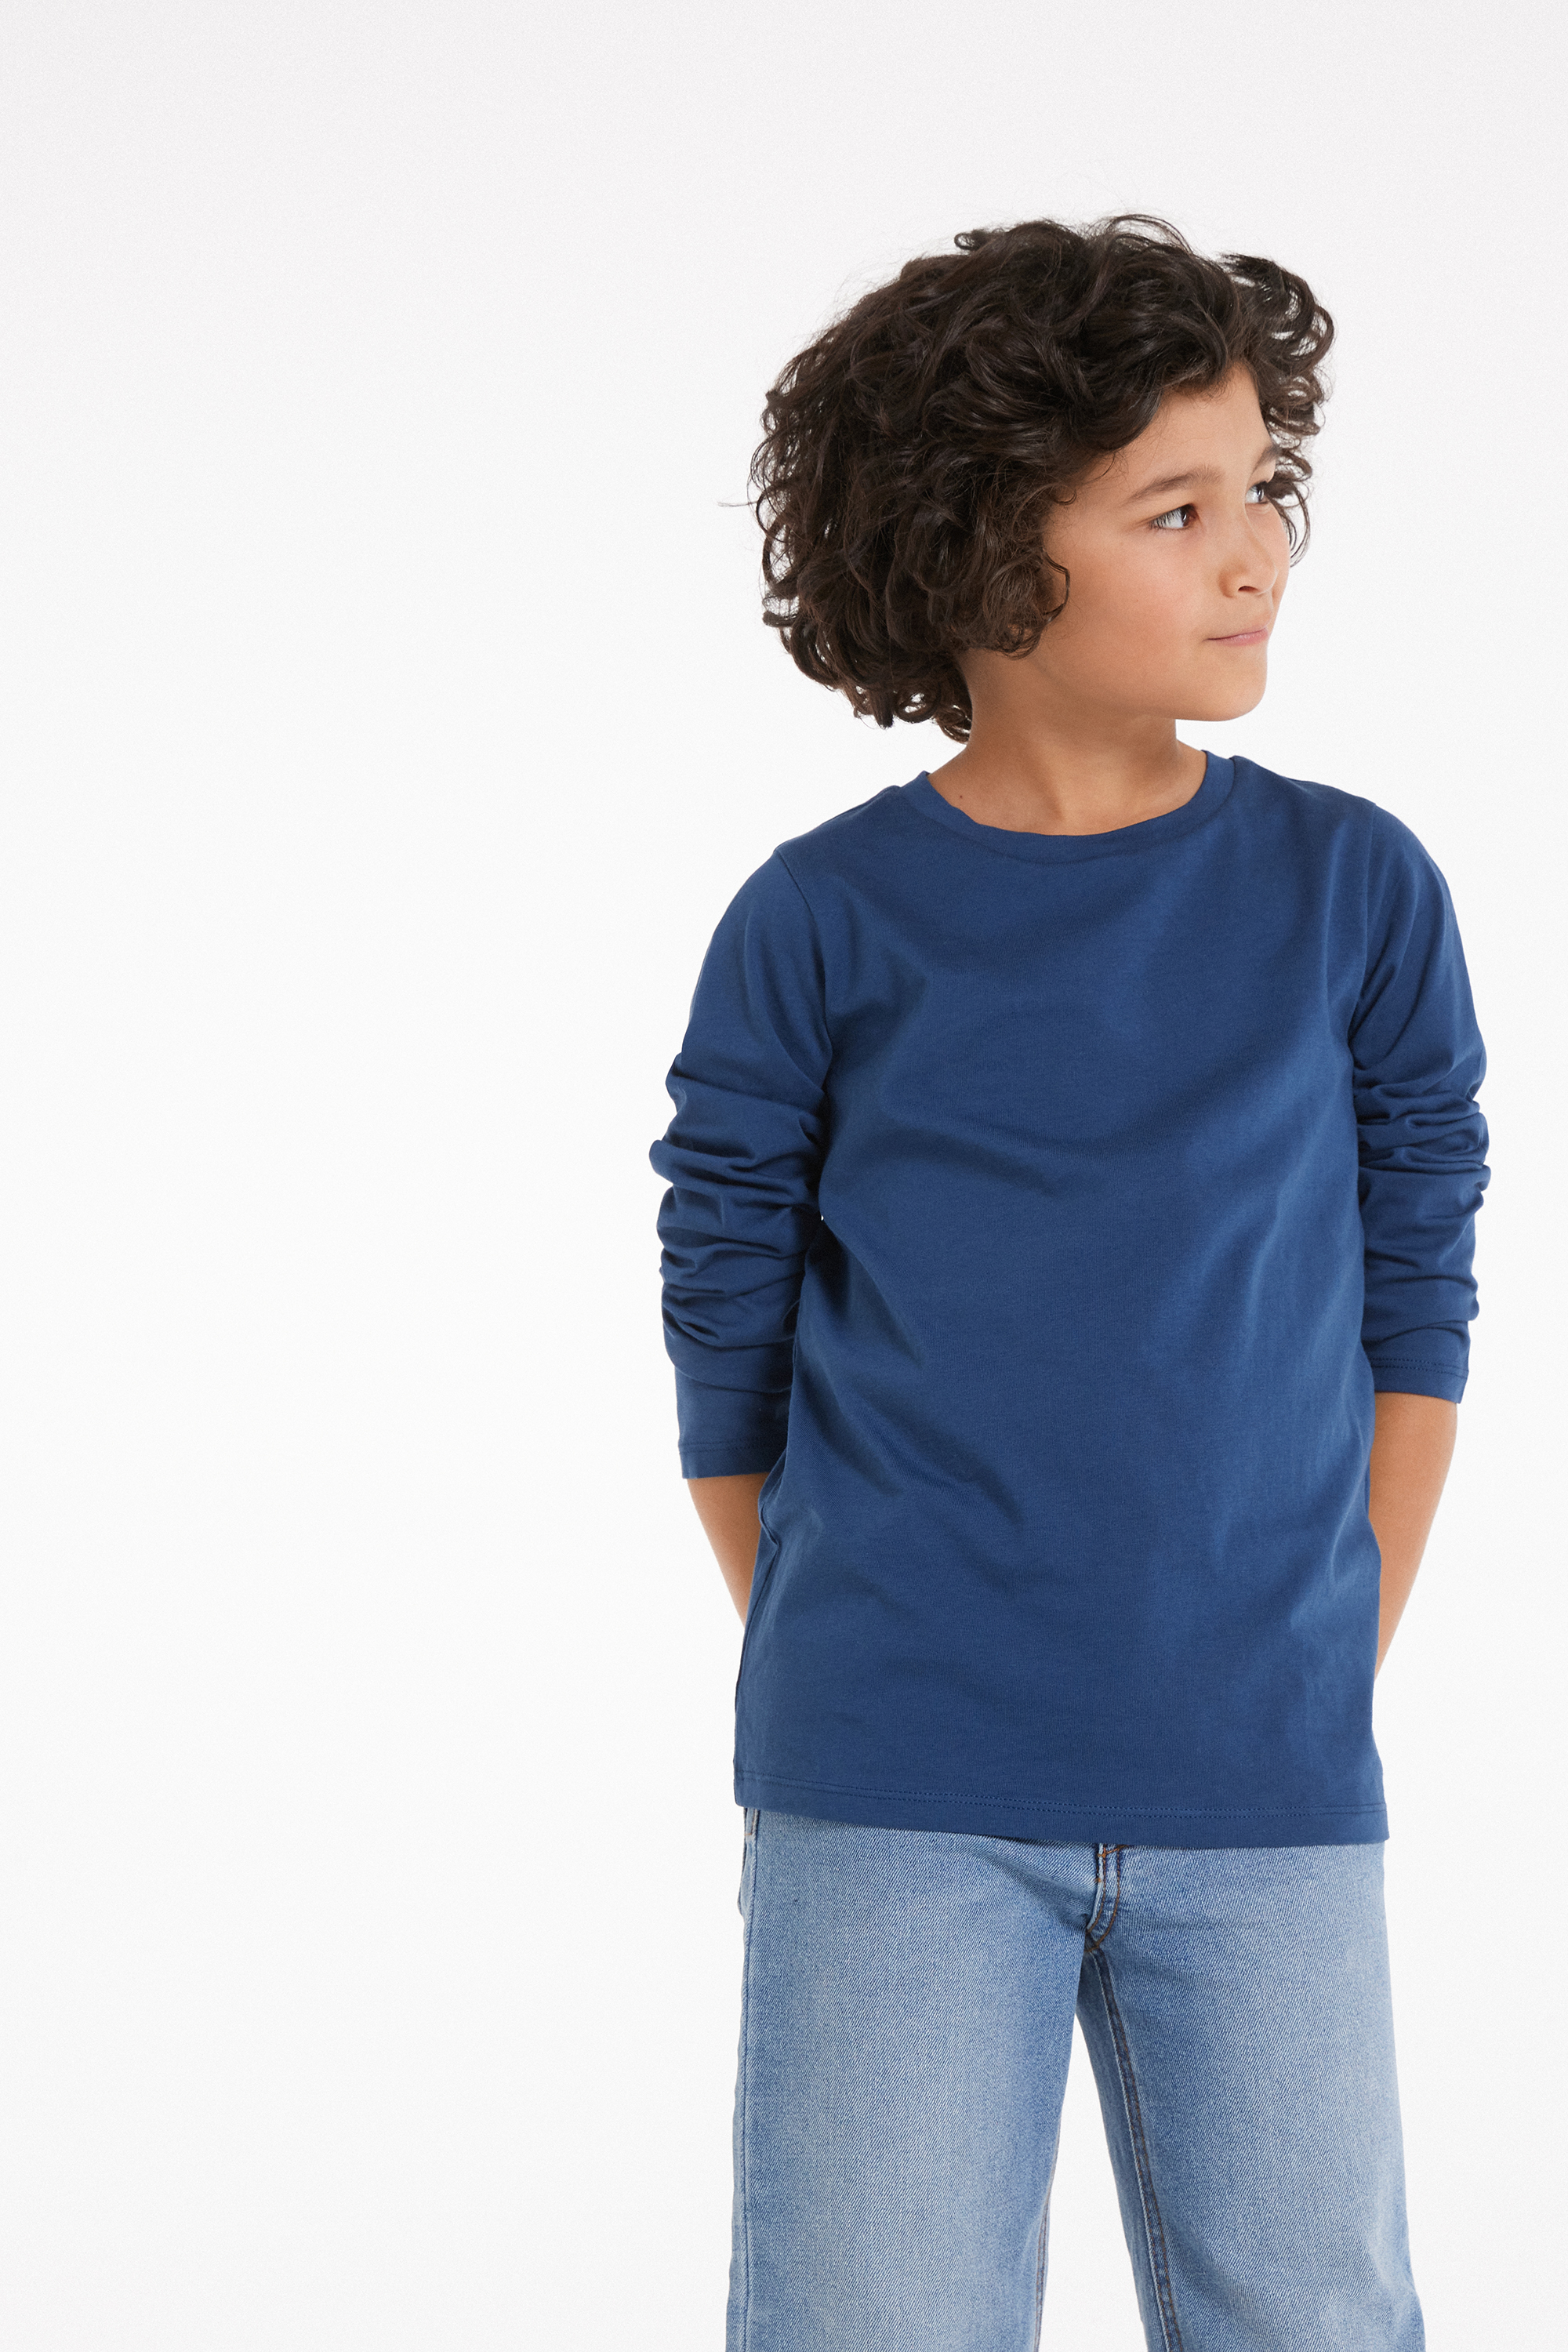 Unisex Kids’ Basic Long-Sleeved Cotton Top